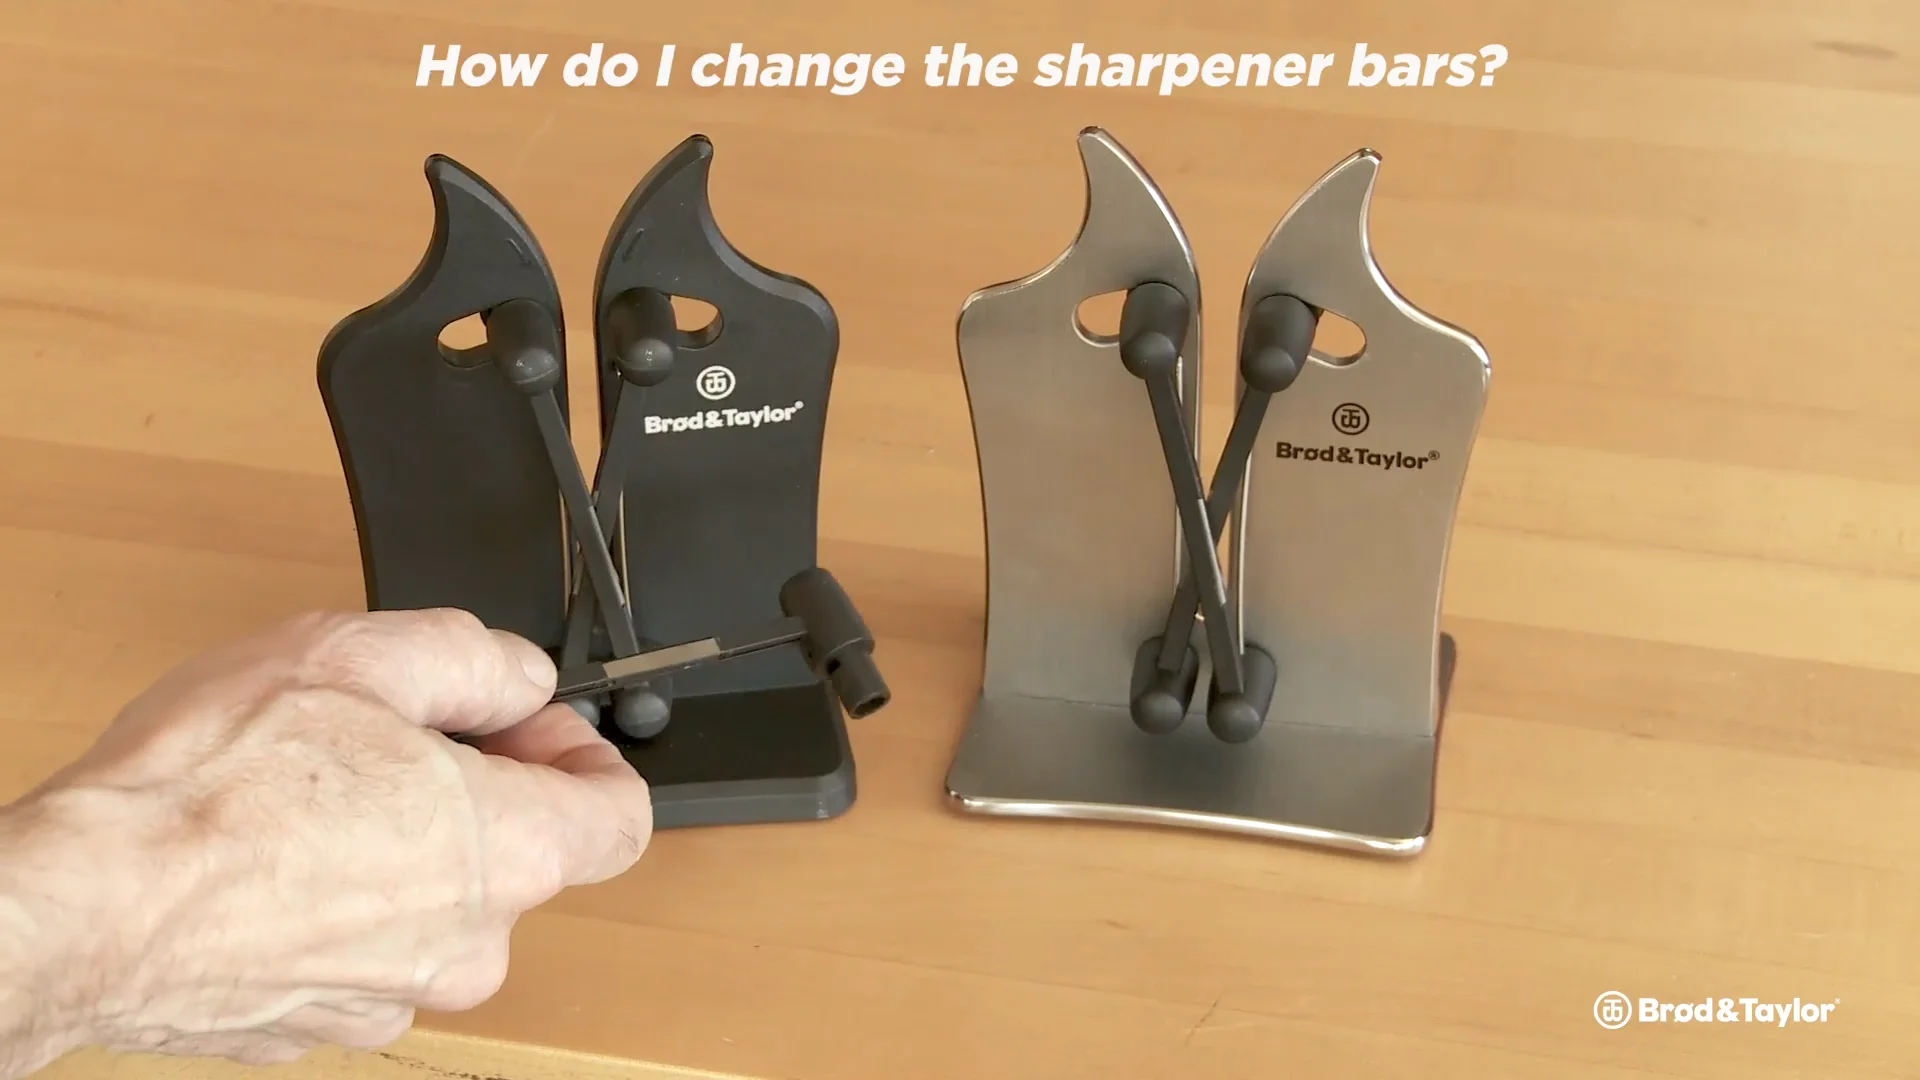 Replacing the Brod & Taylor VG2 Knife Sharpener Bars on Vimeo